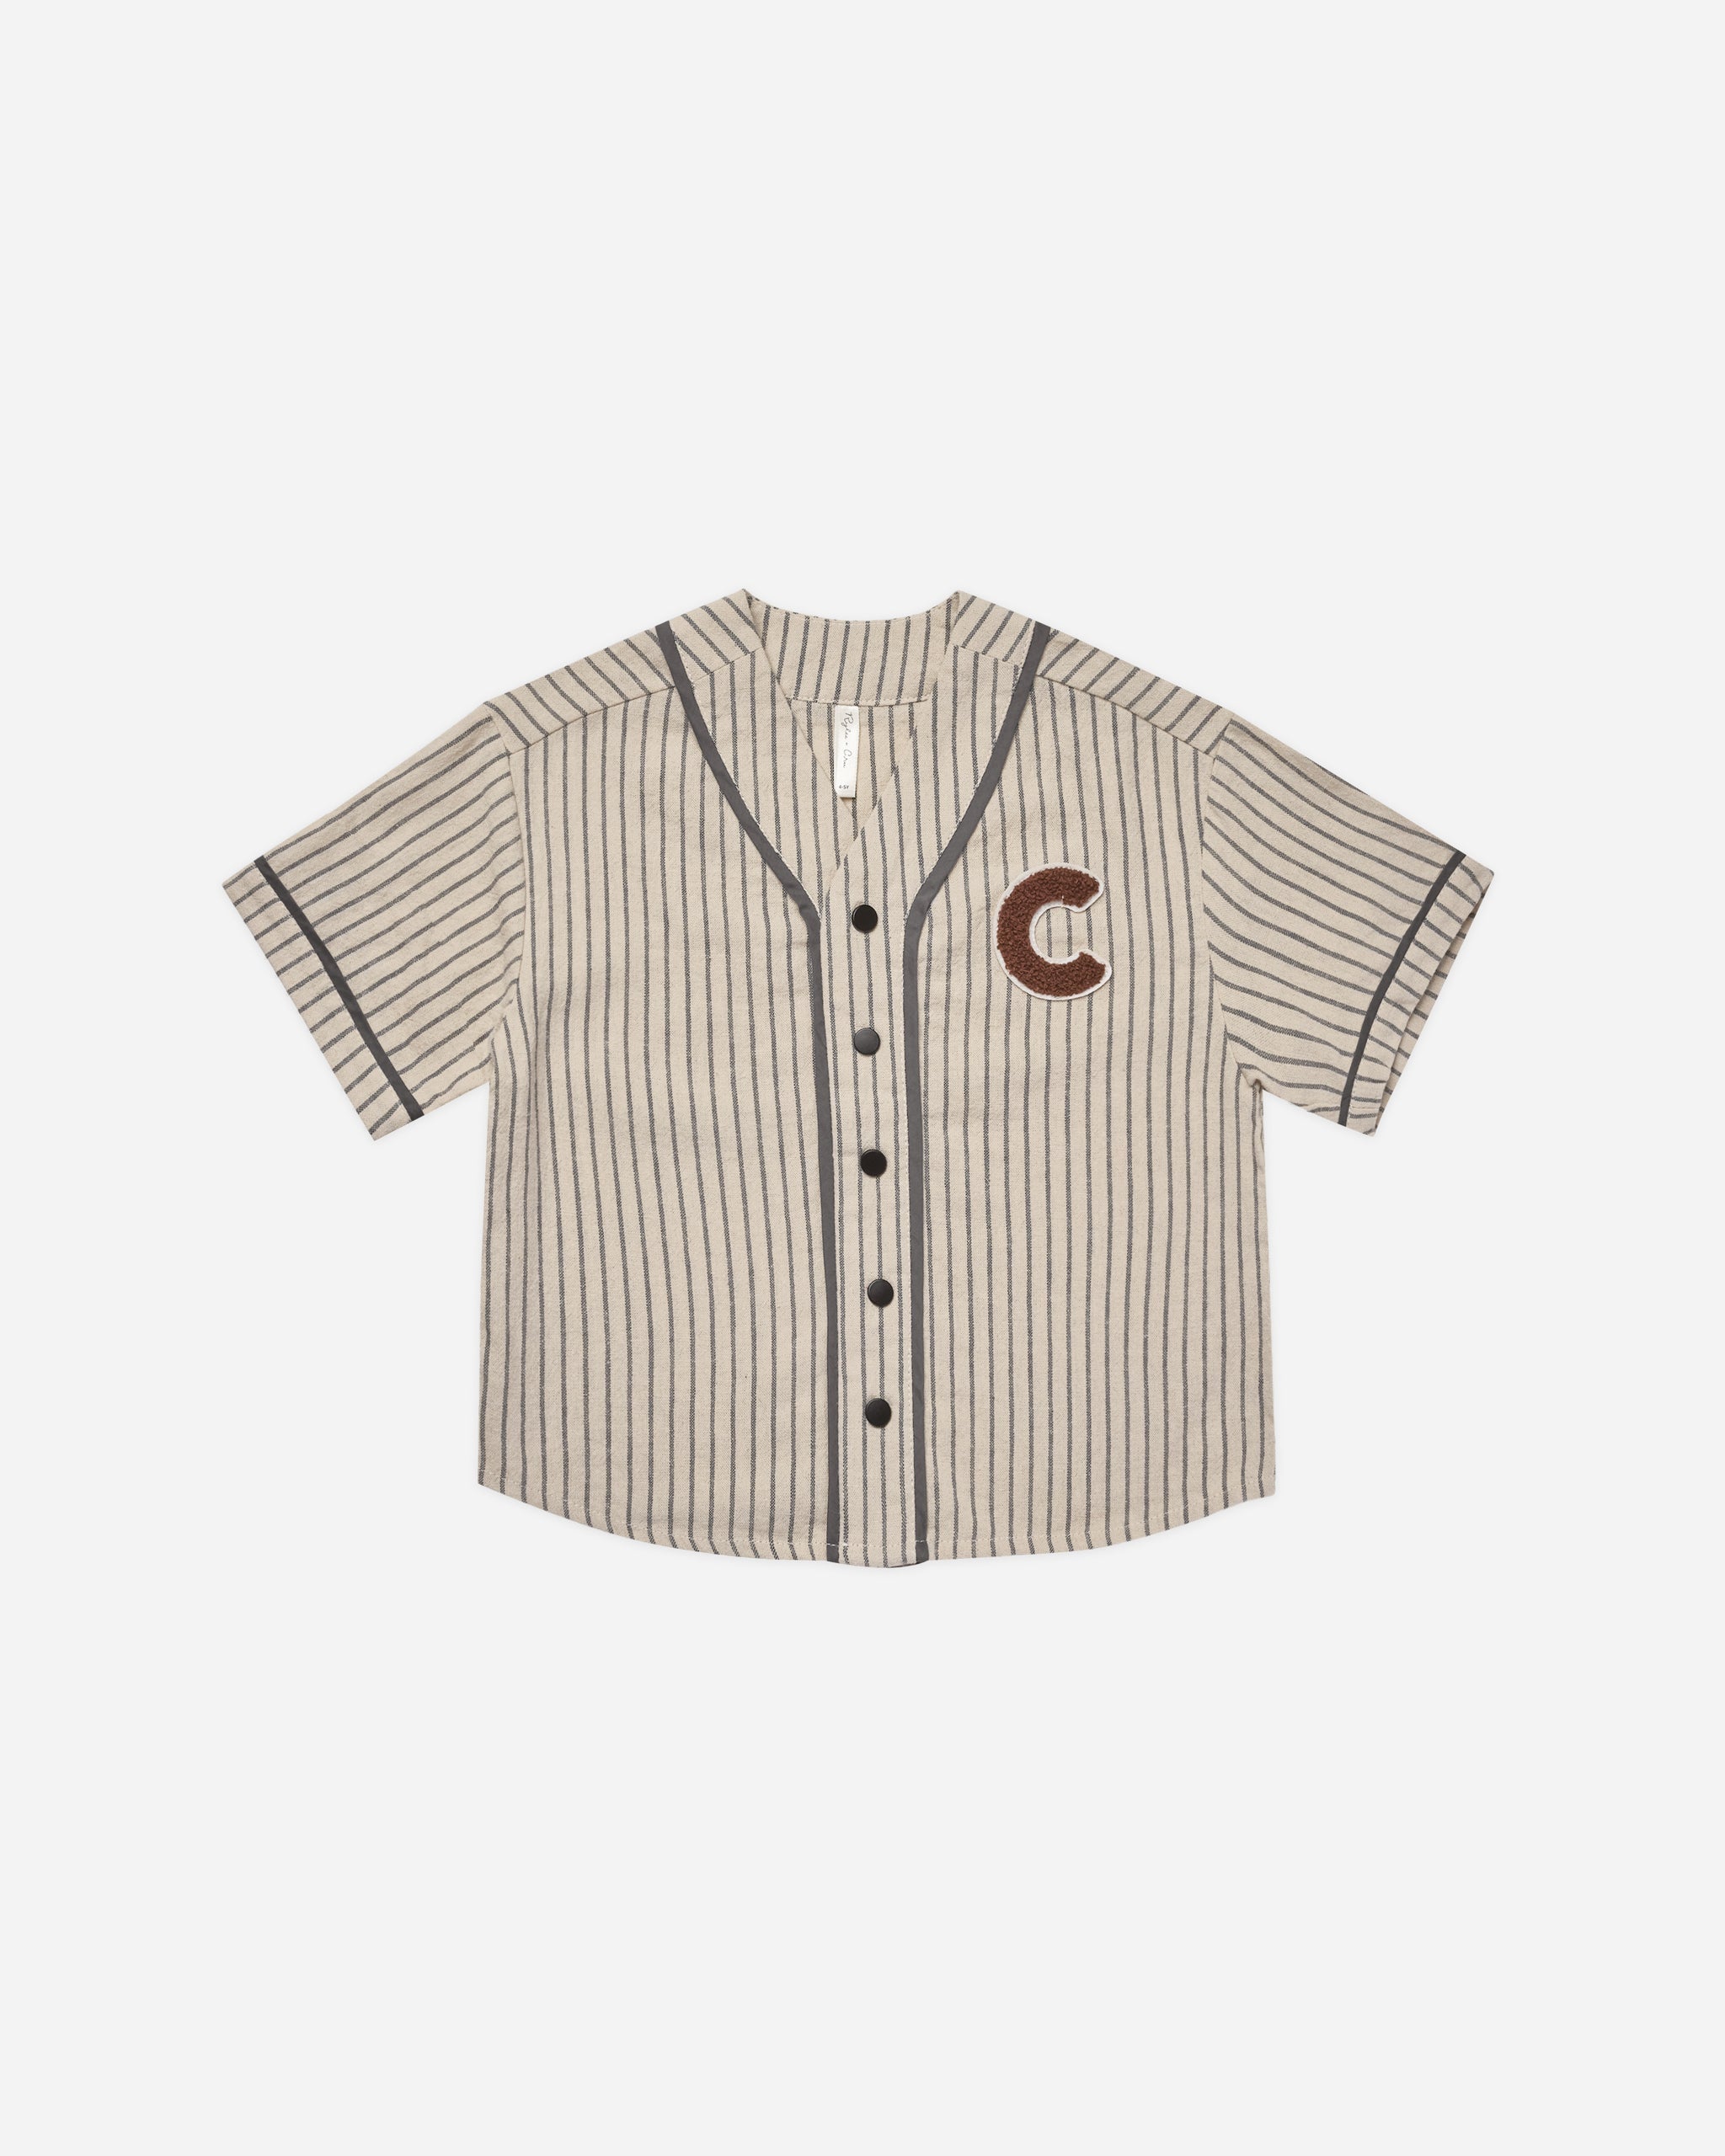 Baseball Shirt || Slate Pinstripe